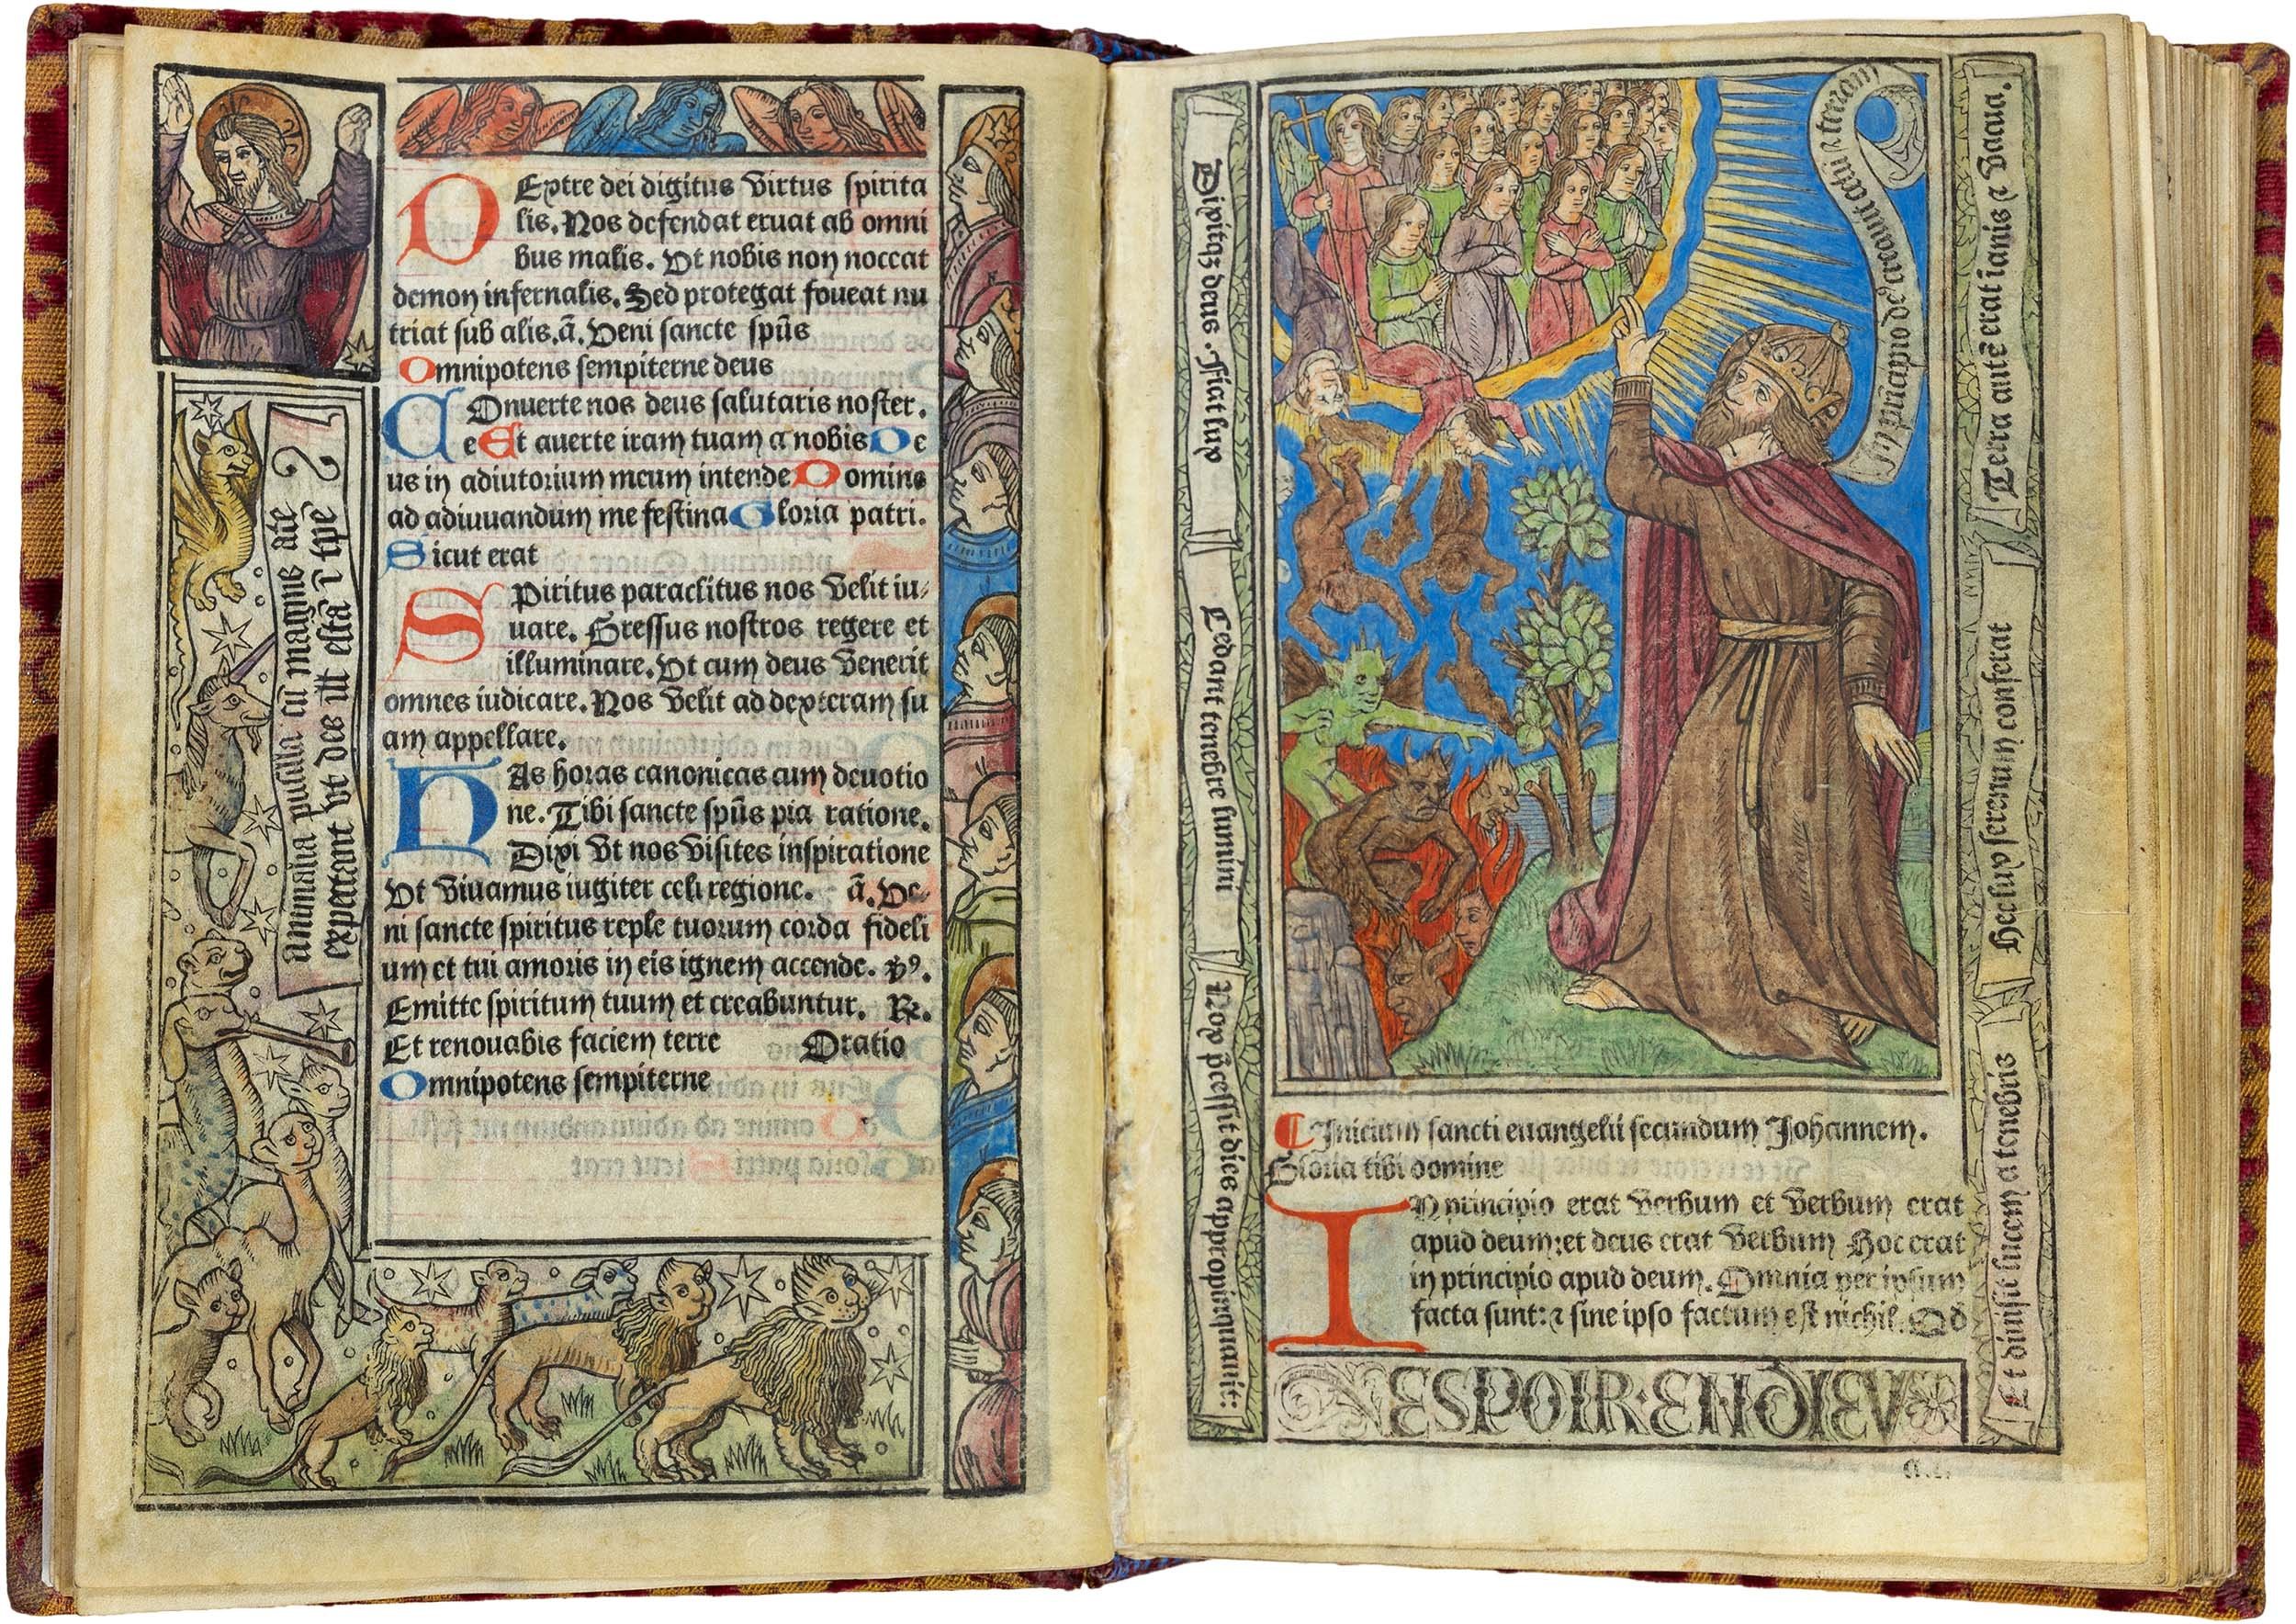 horae-bmv-8.10.1488-dupre-verard-printed-book-of-hours-illuminated-vellum-copy-king-charles-viii-15.jpg